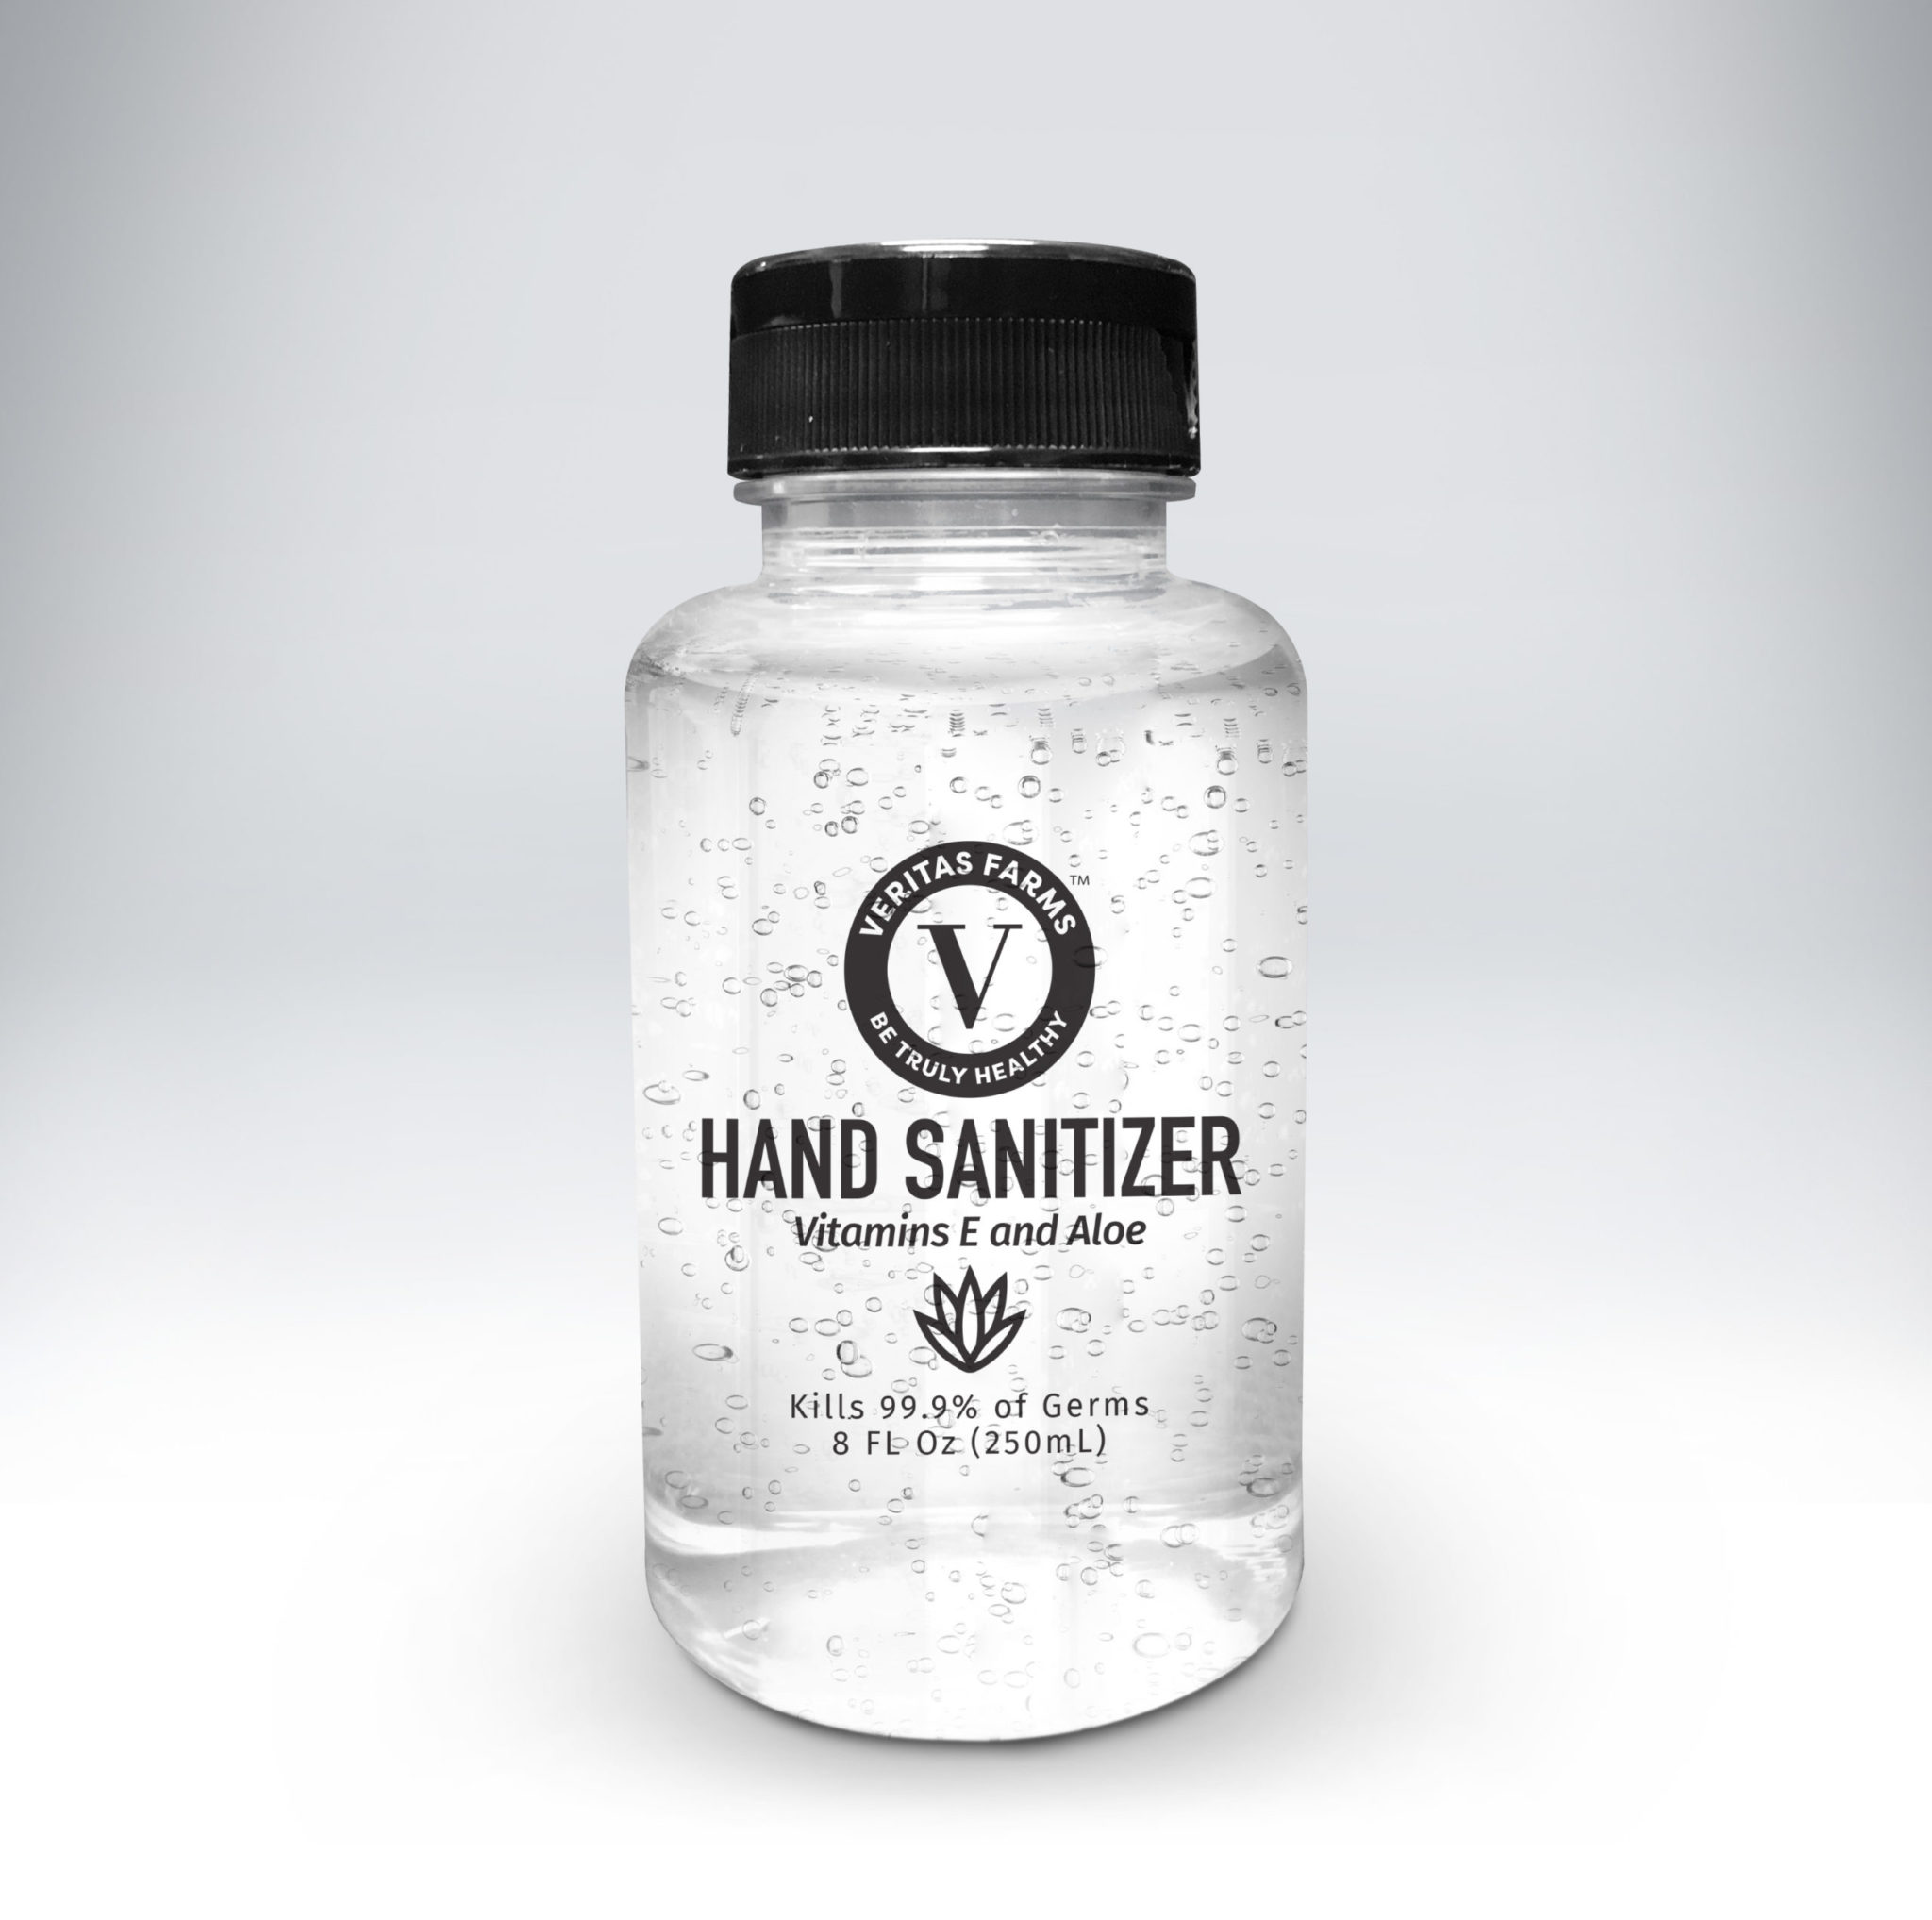 Veritas Farms hand sanitizer